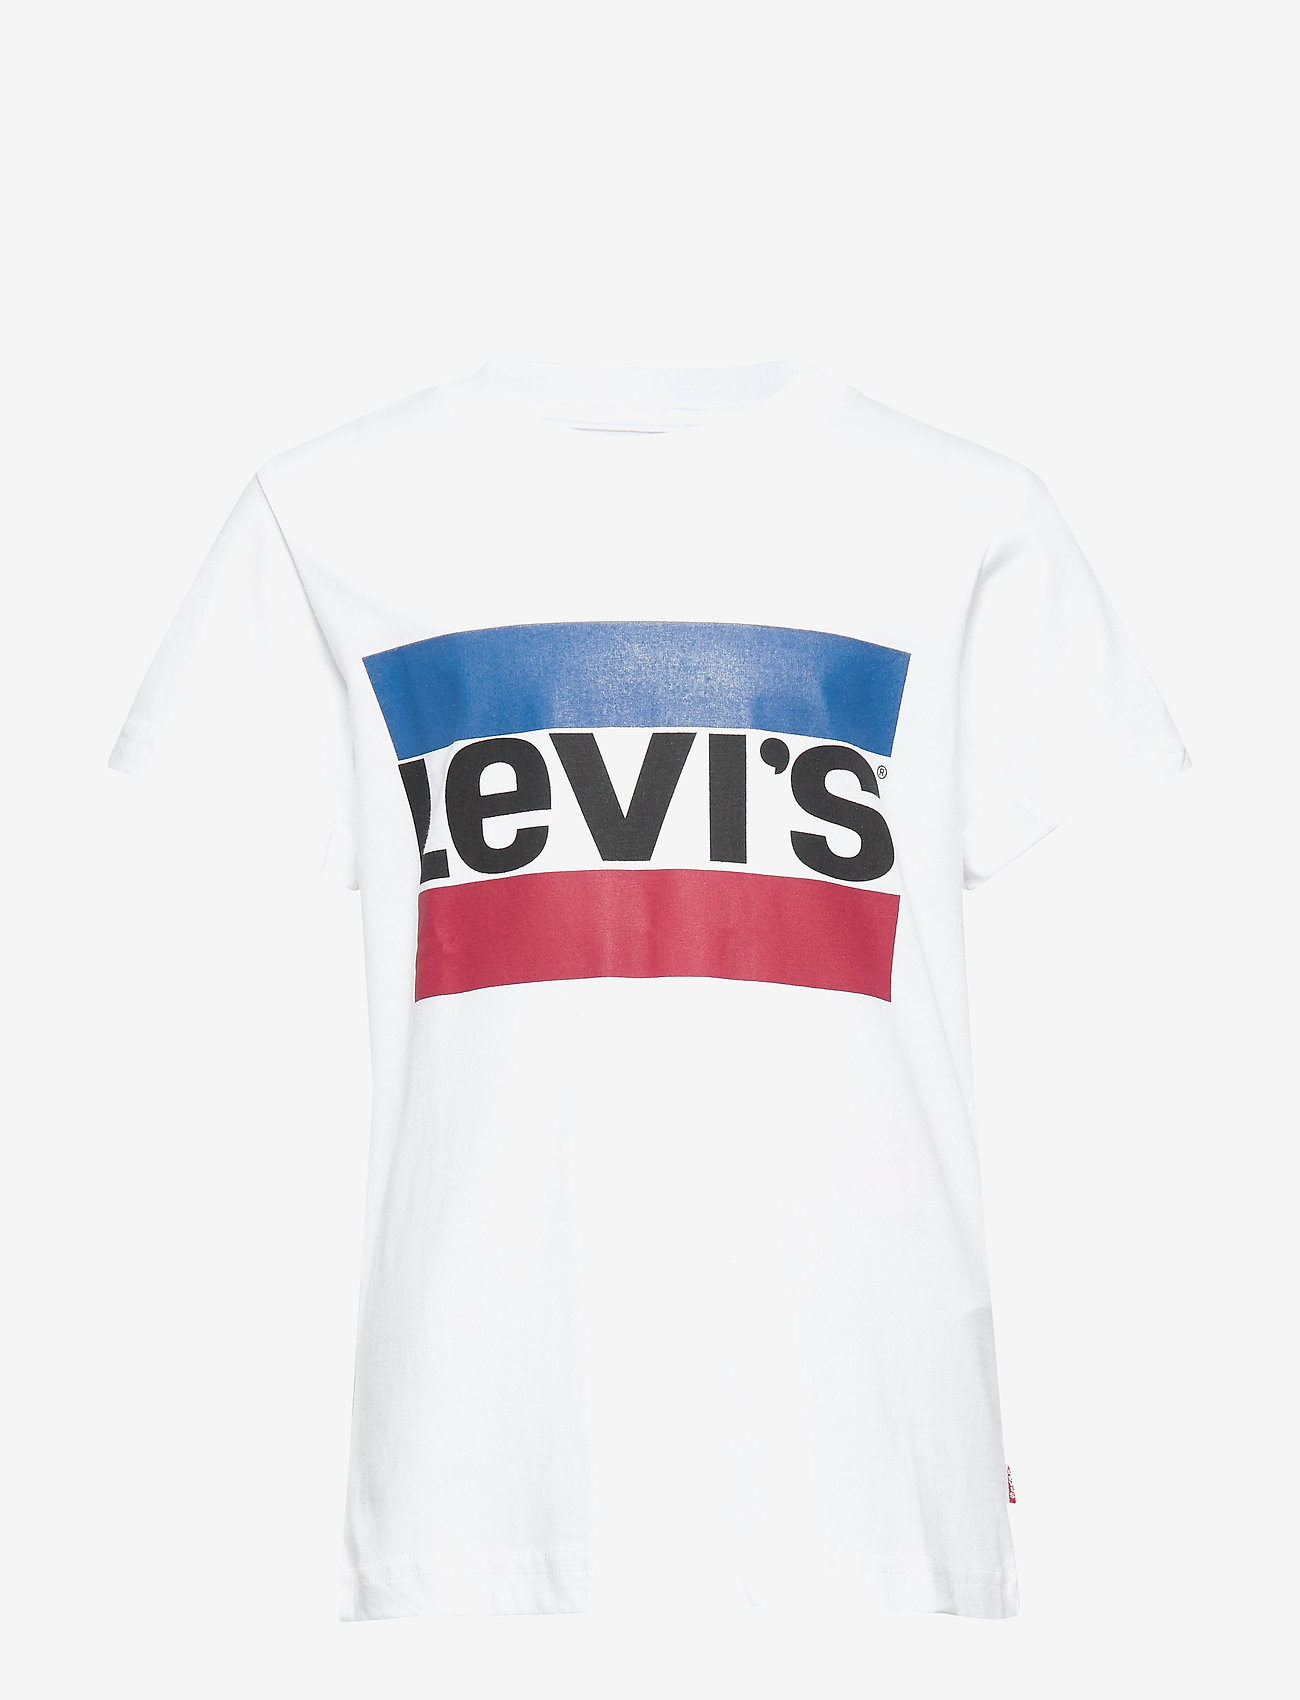 Levi's - Levi's® Long Sleeve Graphic Tee Shirt - kurzärmelige - transparent - 0